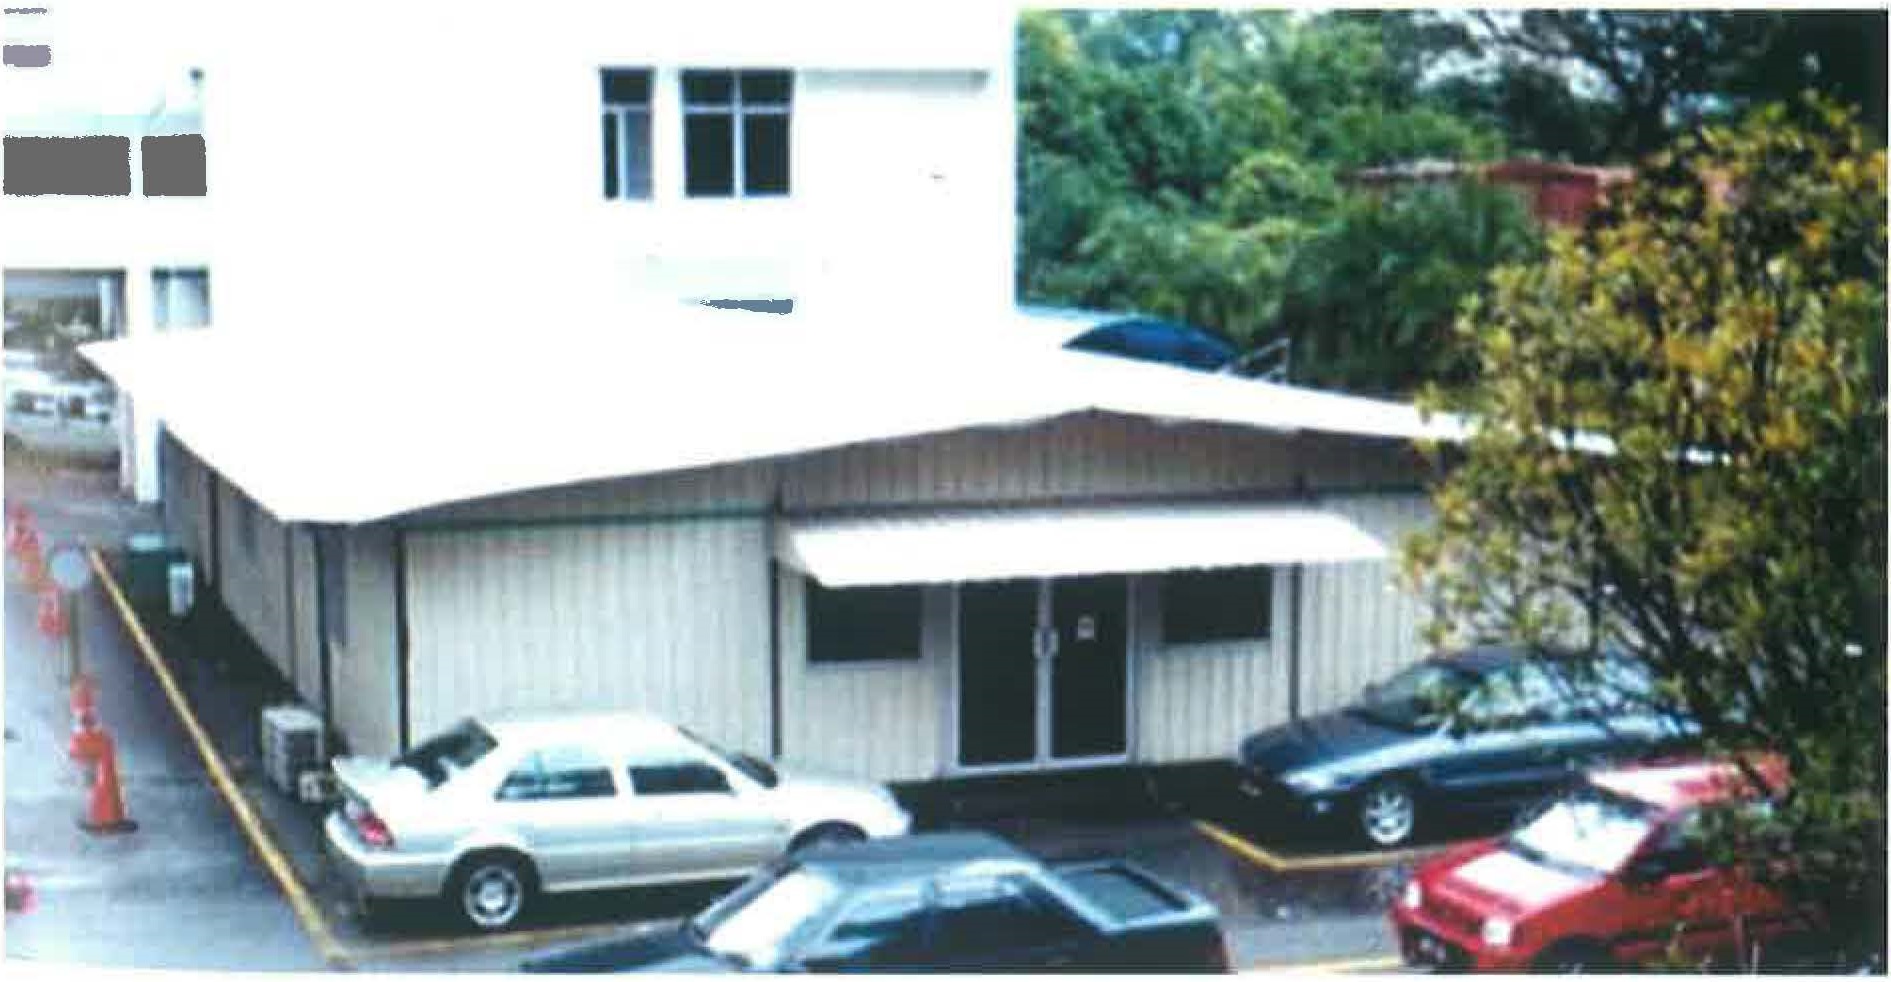 SUHAKAM first office